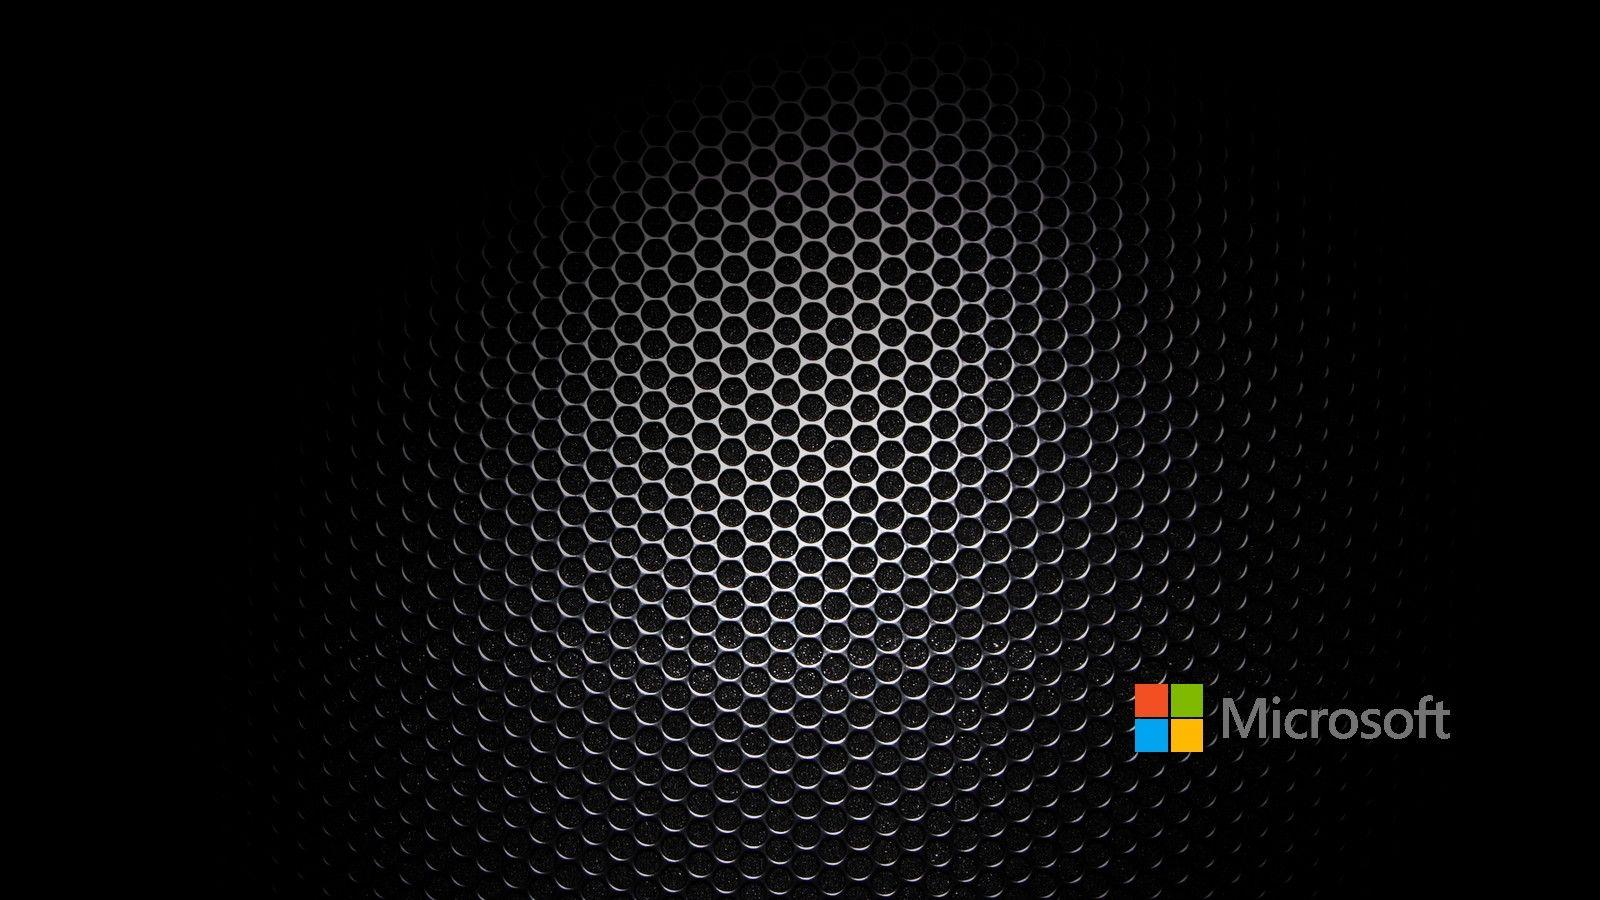 Microsoft Wallpaper 2013 Desk HD Picture. Best